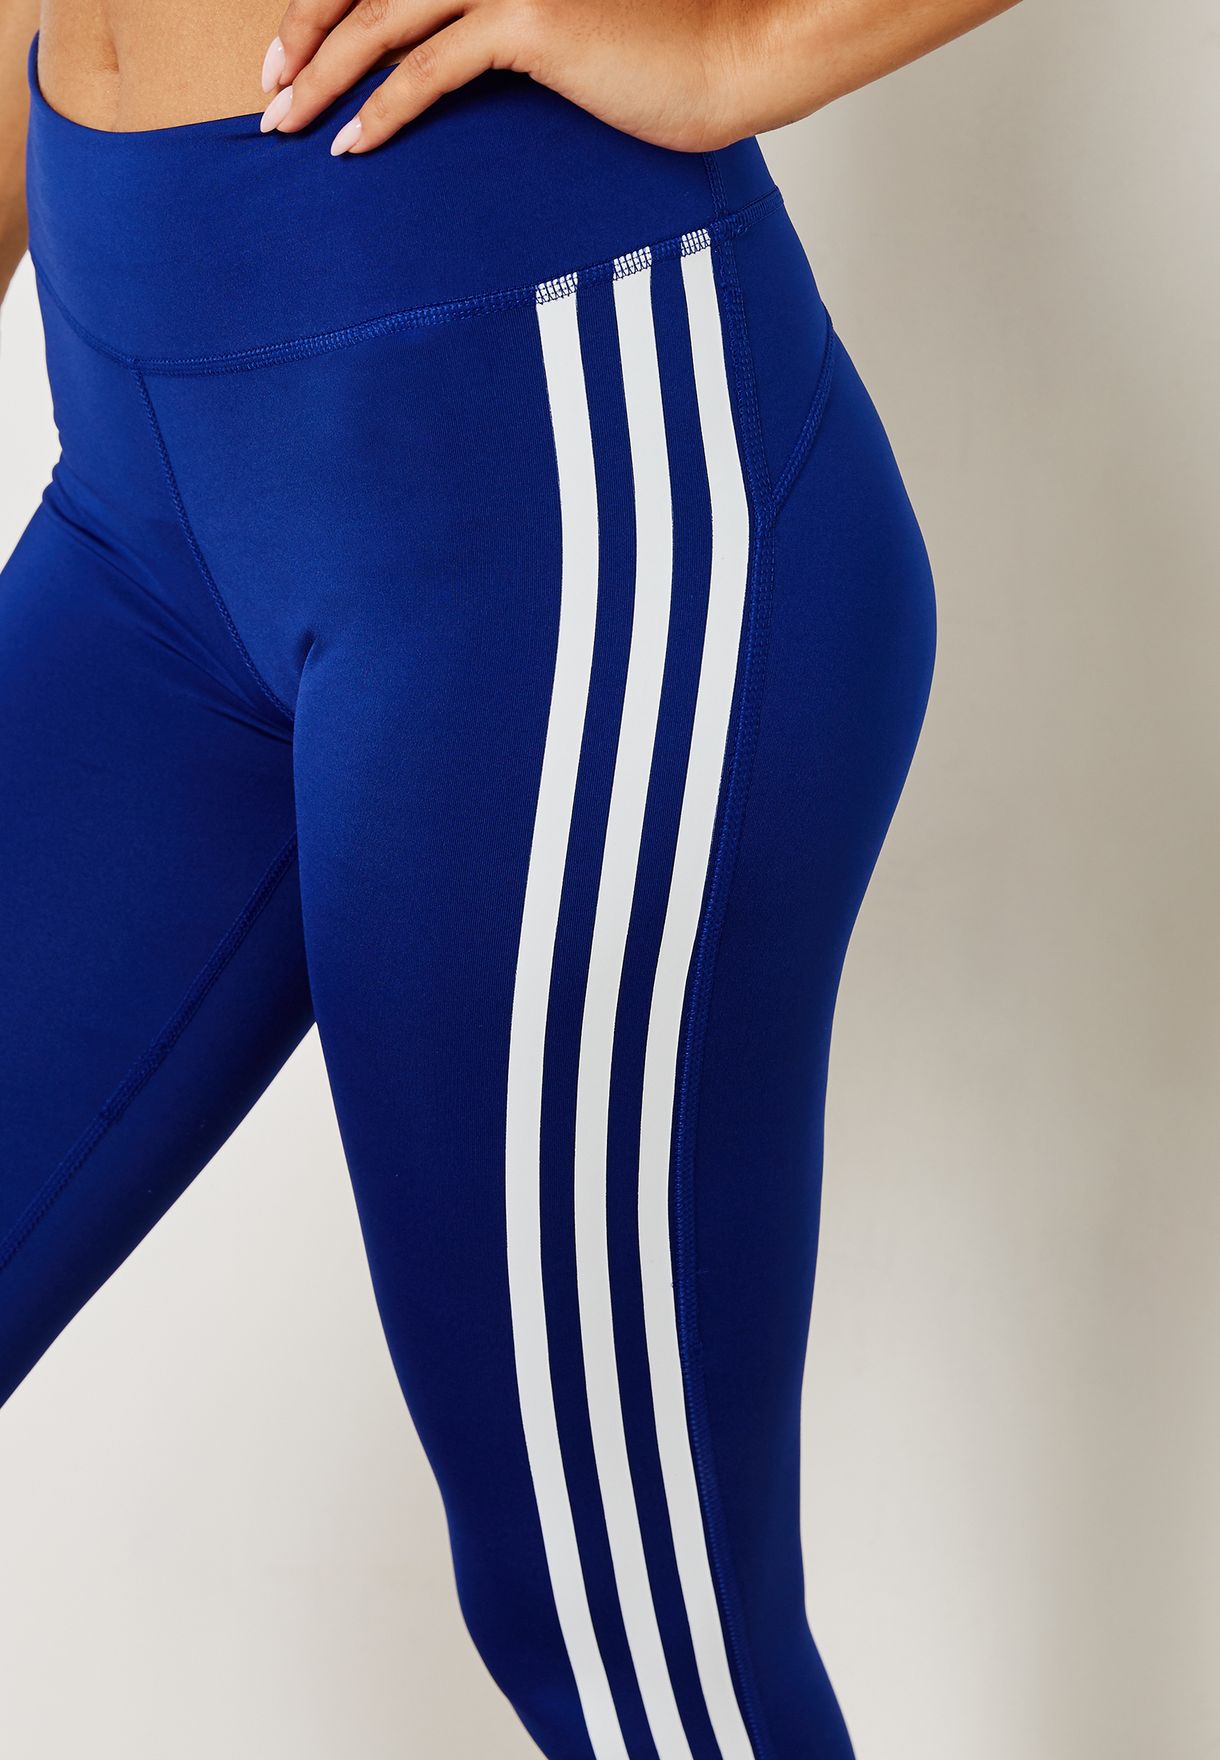 adidas blue 3 stripe leggings